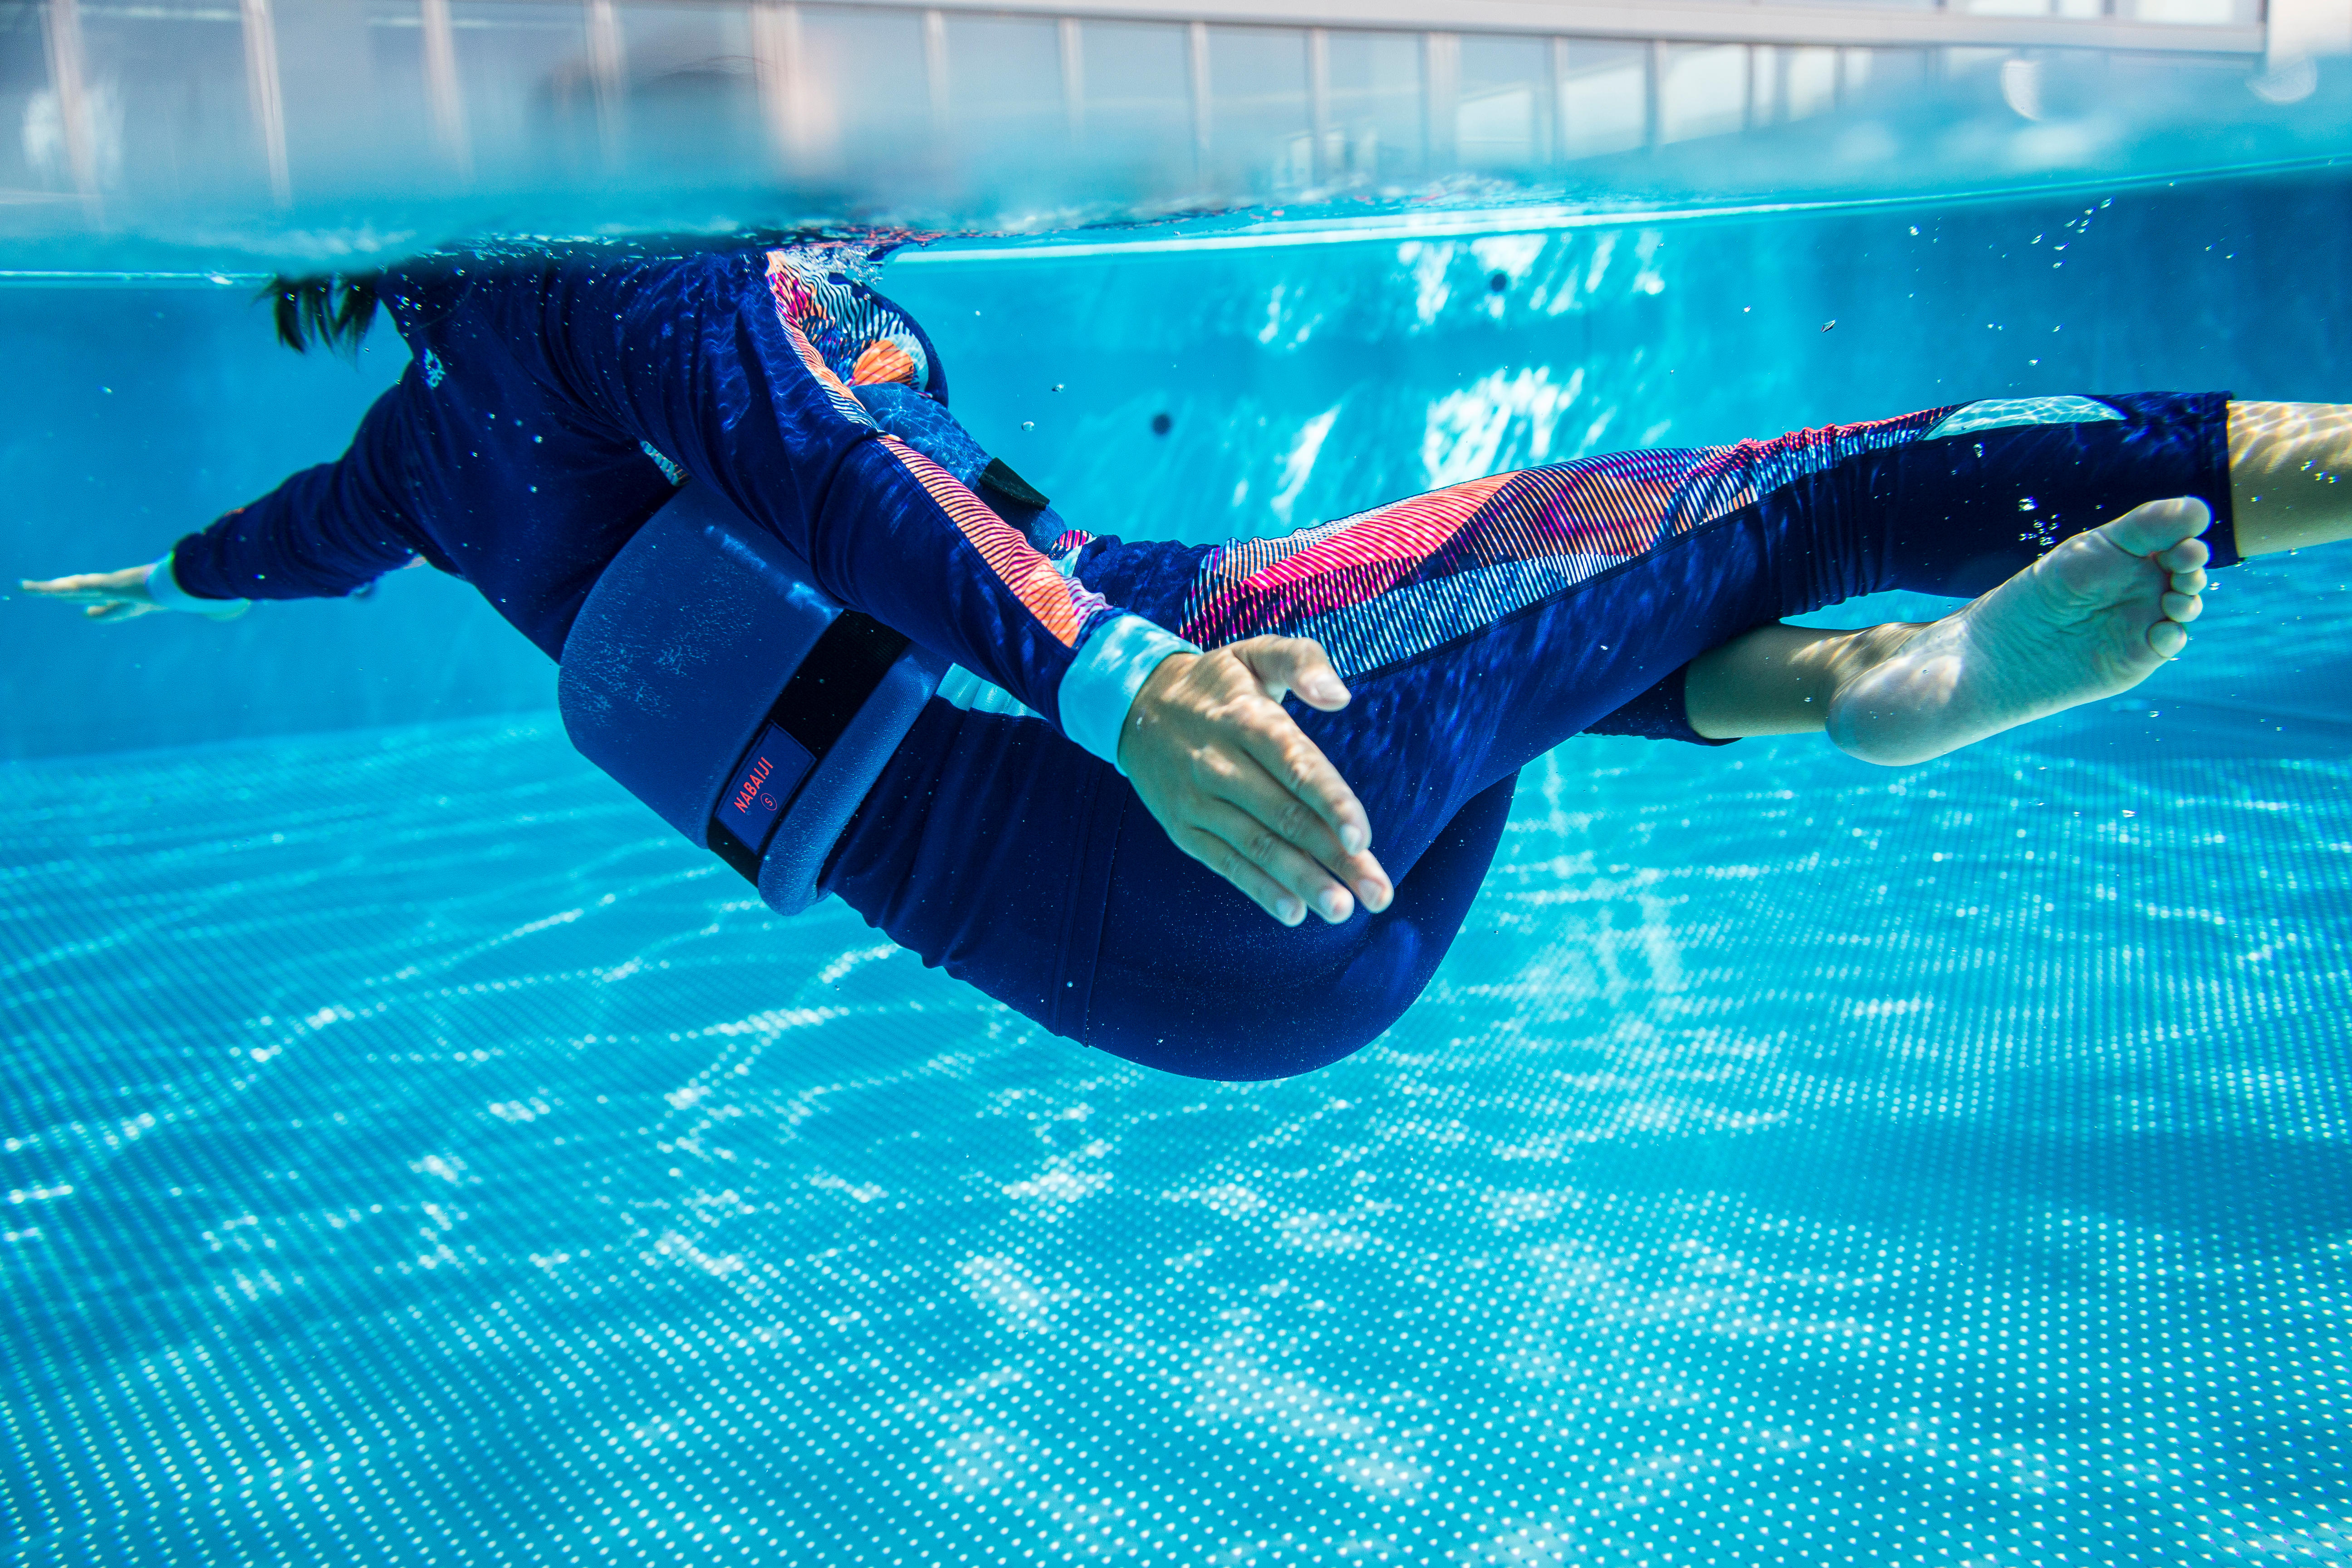 Hdyro-Fit WAVE Belt Aquatic Exercise Buoyancy and Swim Belt